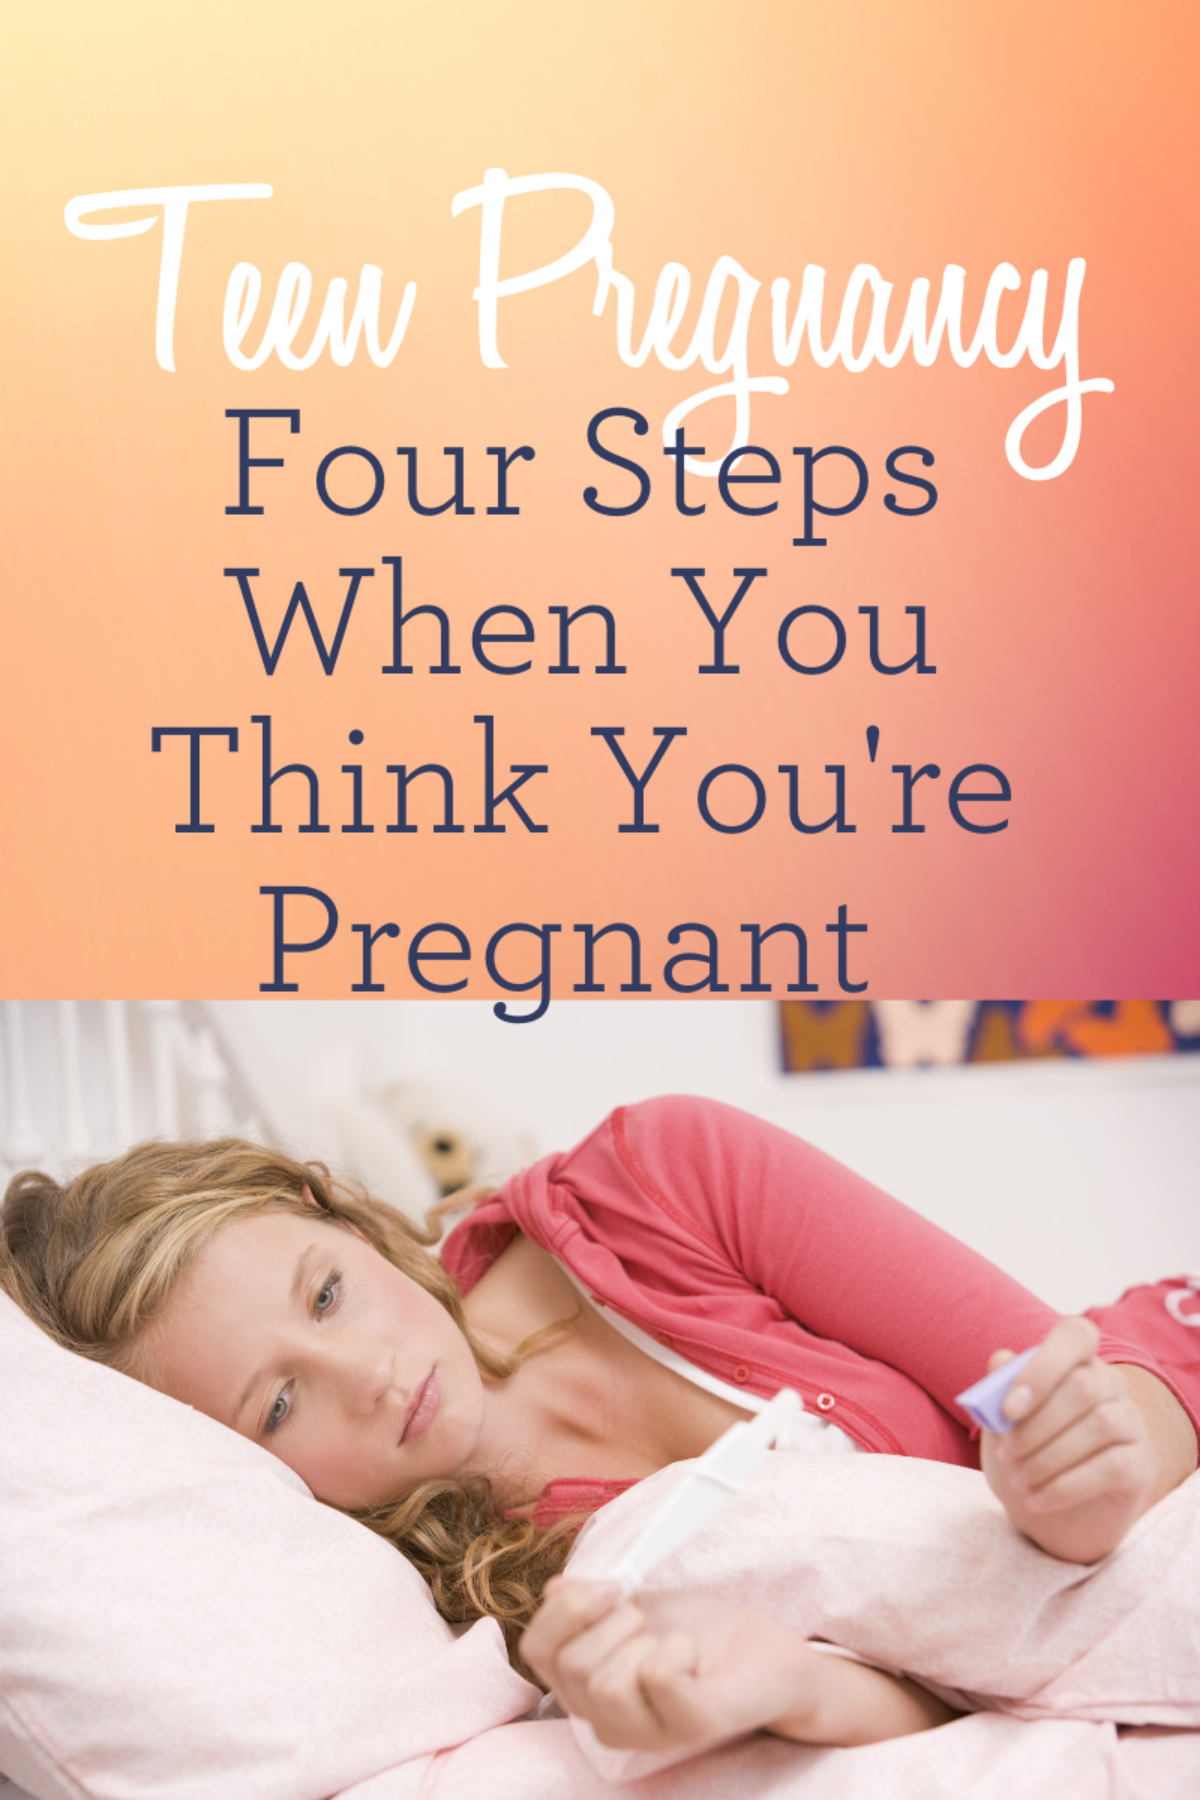 https://pregnancysheridan.org/wp-content/uploads/Teen-Pregnancy-Blog-1200x1800.png